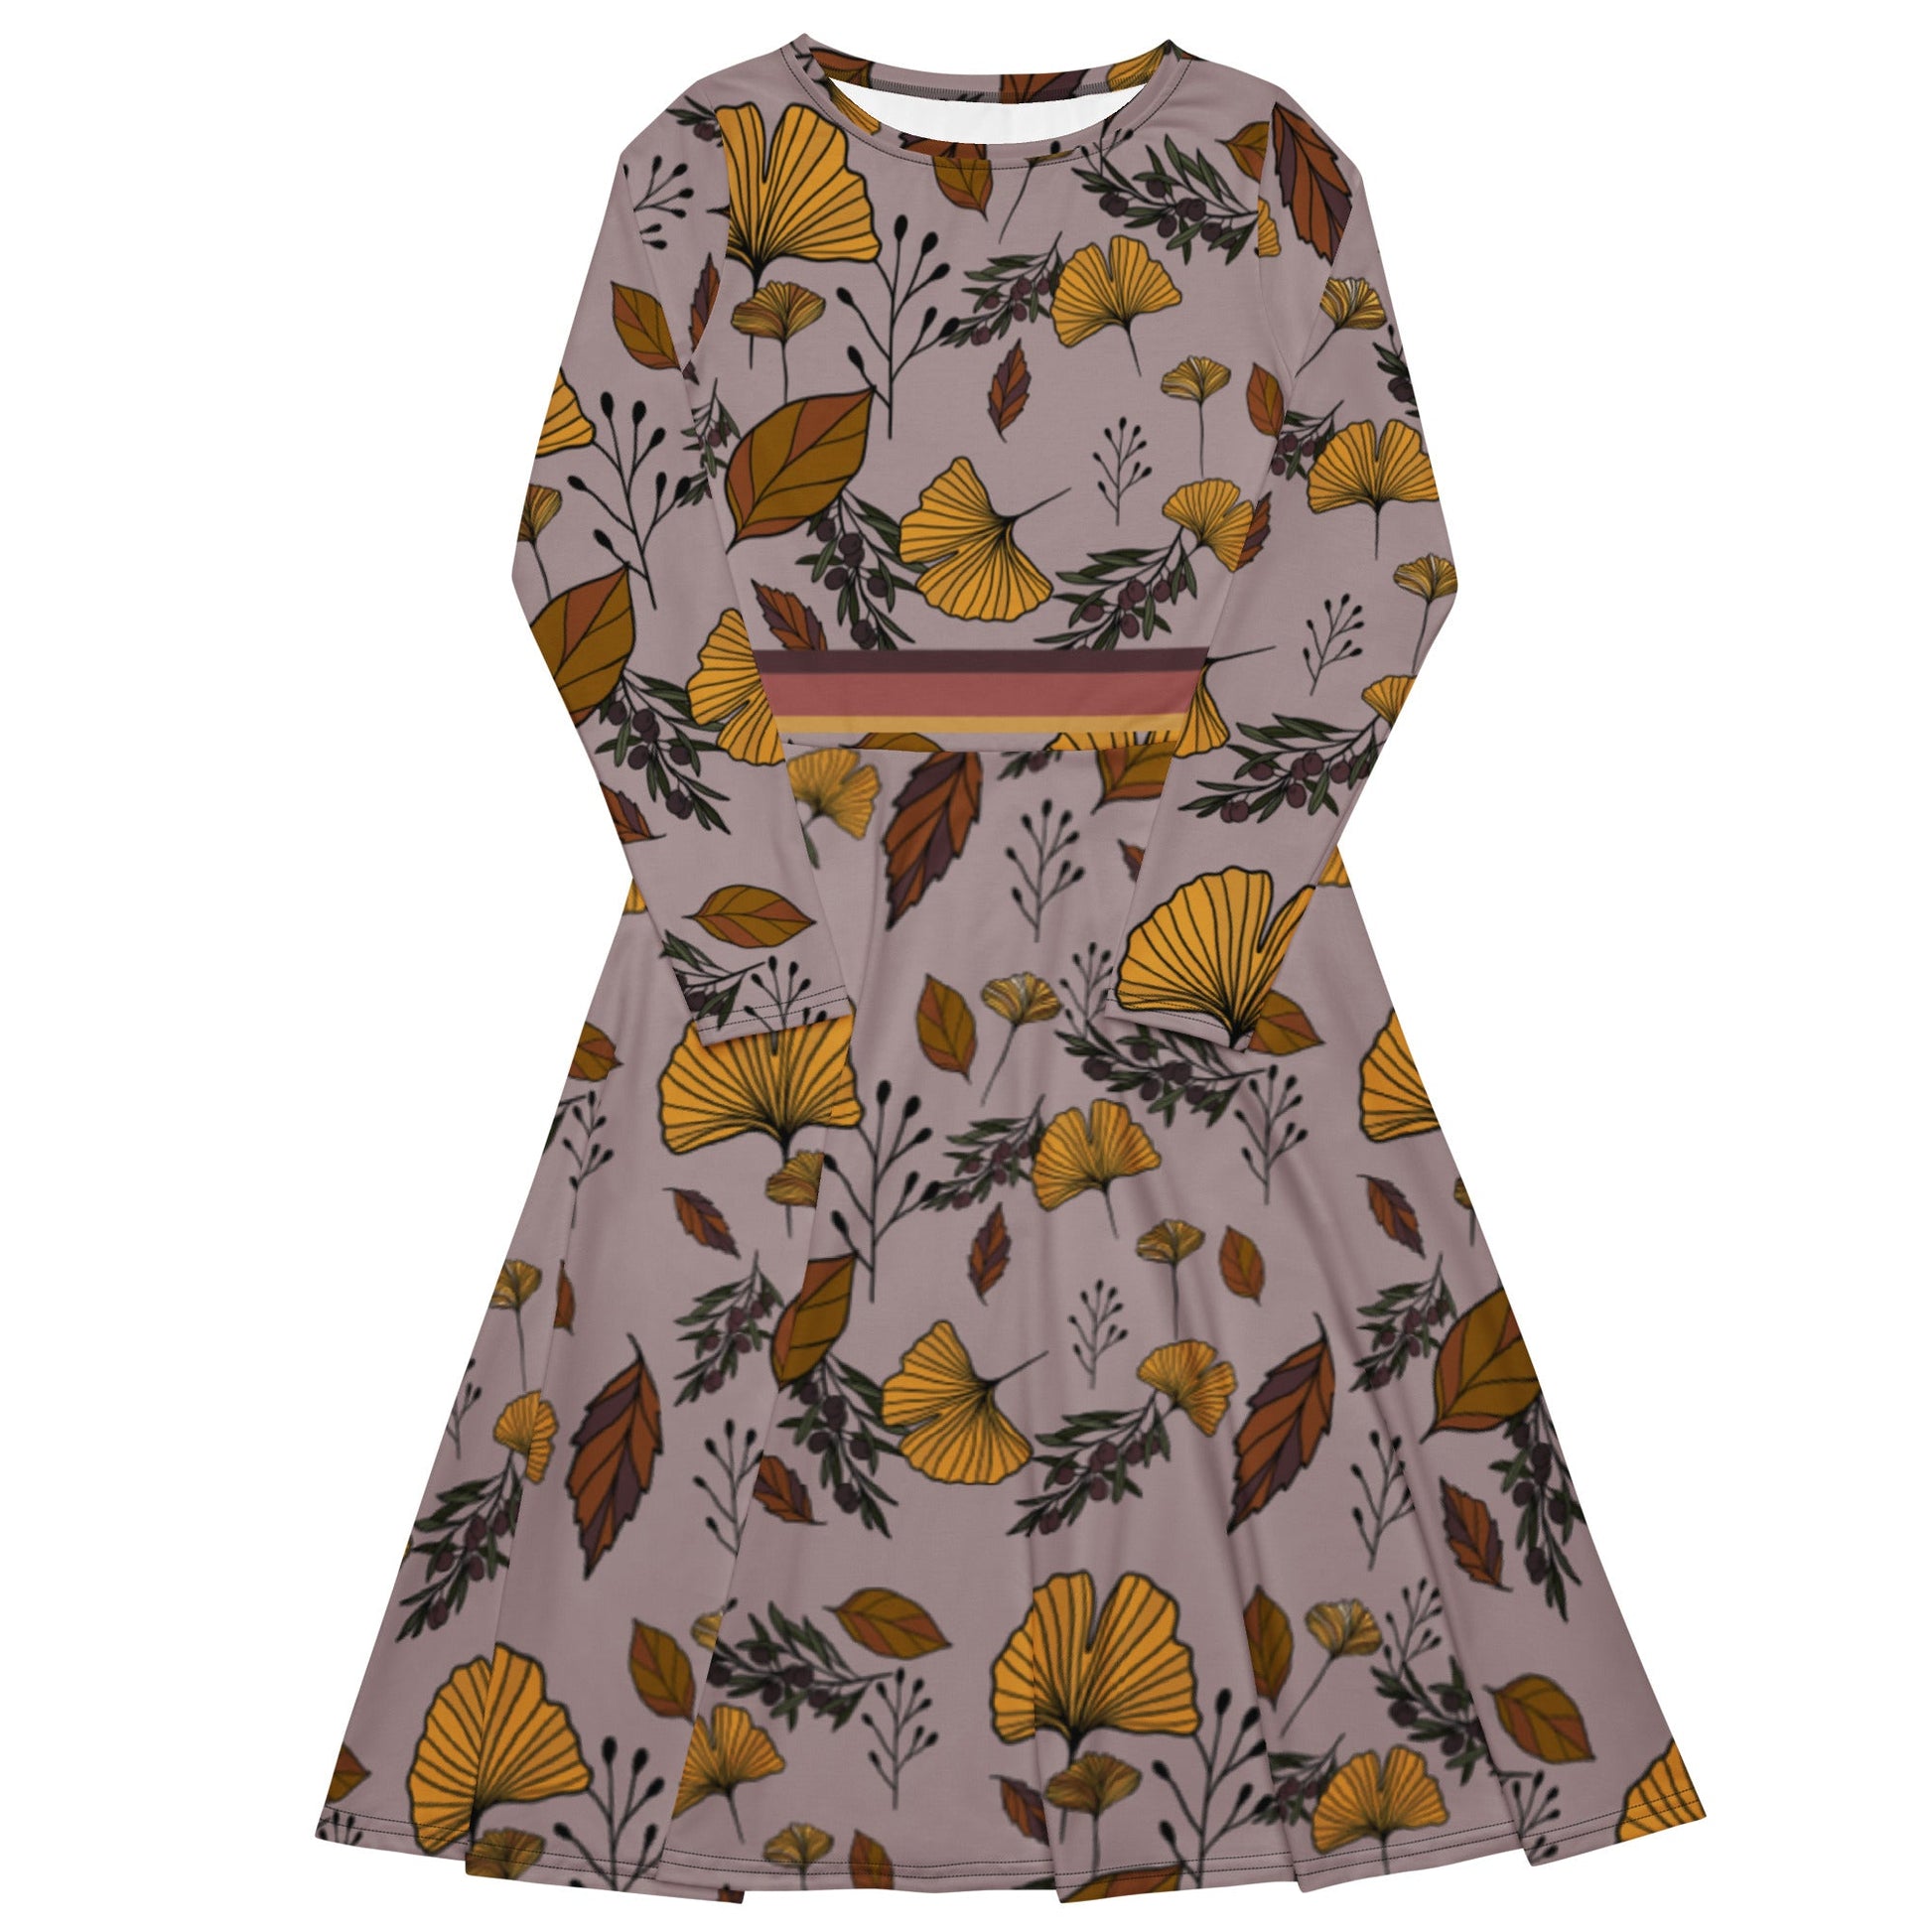 Retro Autumn Leaves Long Sleeve Adventure Dress with Pockets - Appalachian Bittersweet -